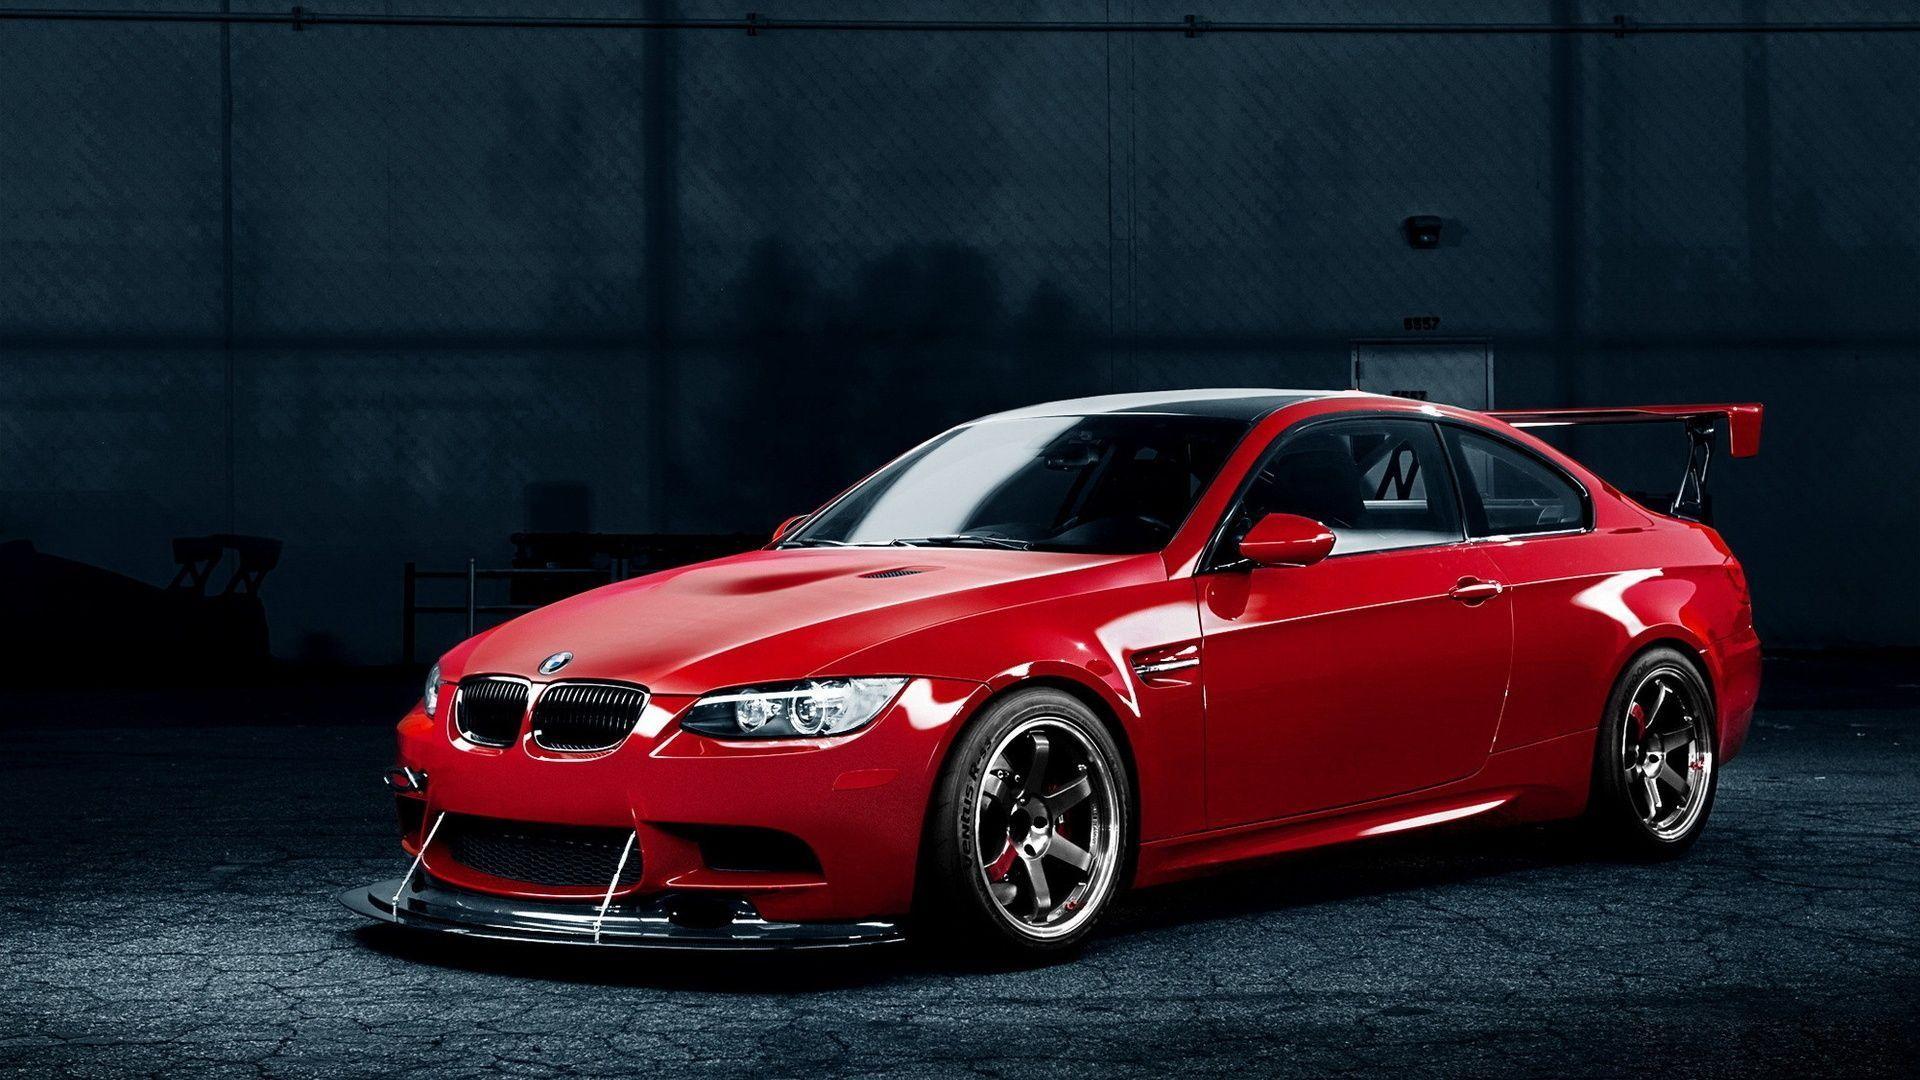 BMW M3 Red Wallpaper. High Definition Wallpaper, High Definition